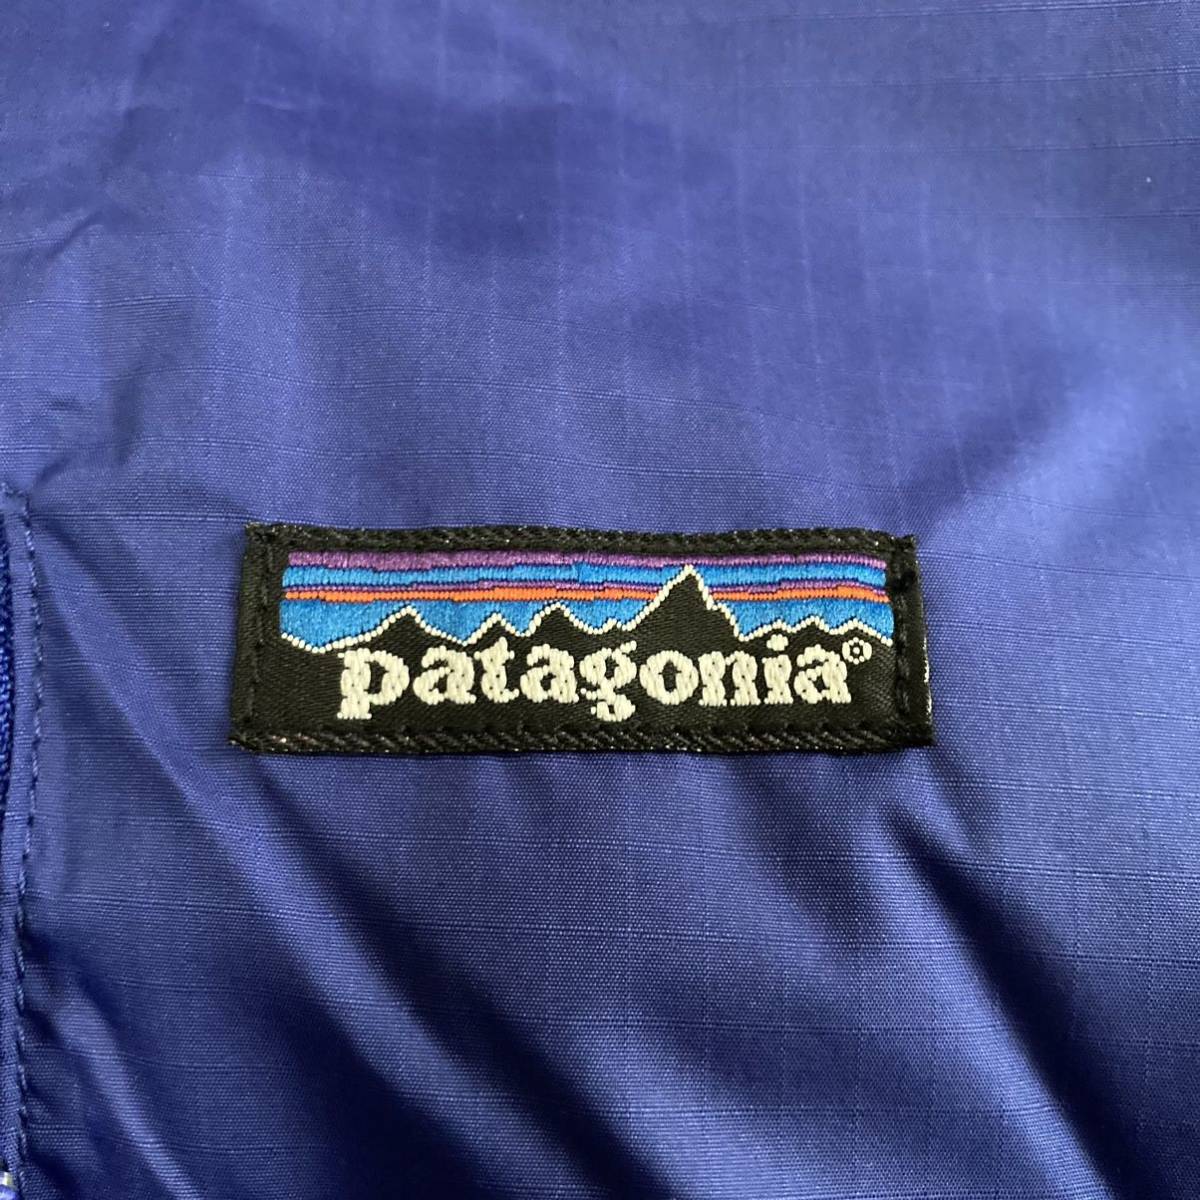 XLサイズ 新品【1999・デッドストック】patagonia ダスパーカ DAS Parka ( ブルーリボン ) 生産終了 廃盤 ユニフォーム・プログラム注文品